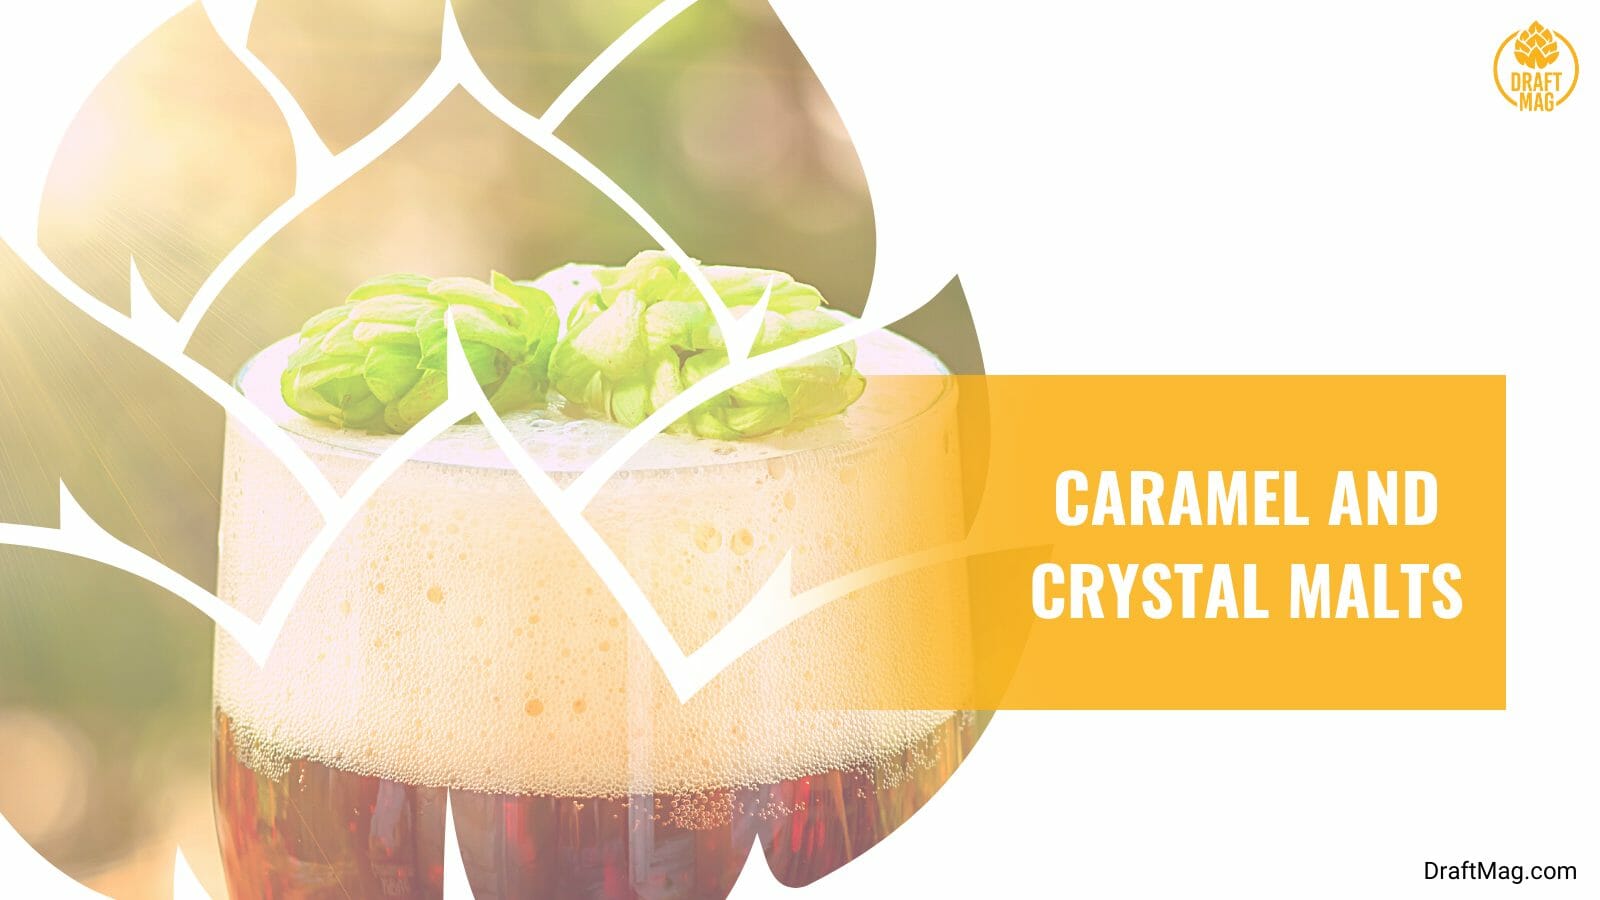 Caramel and crystal malts